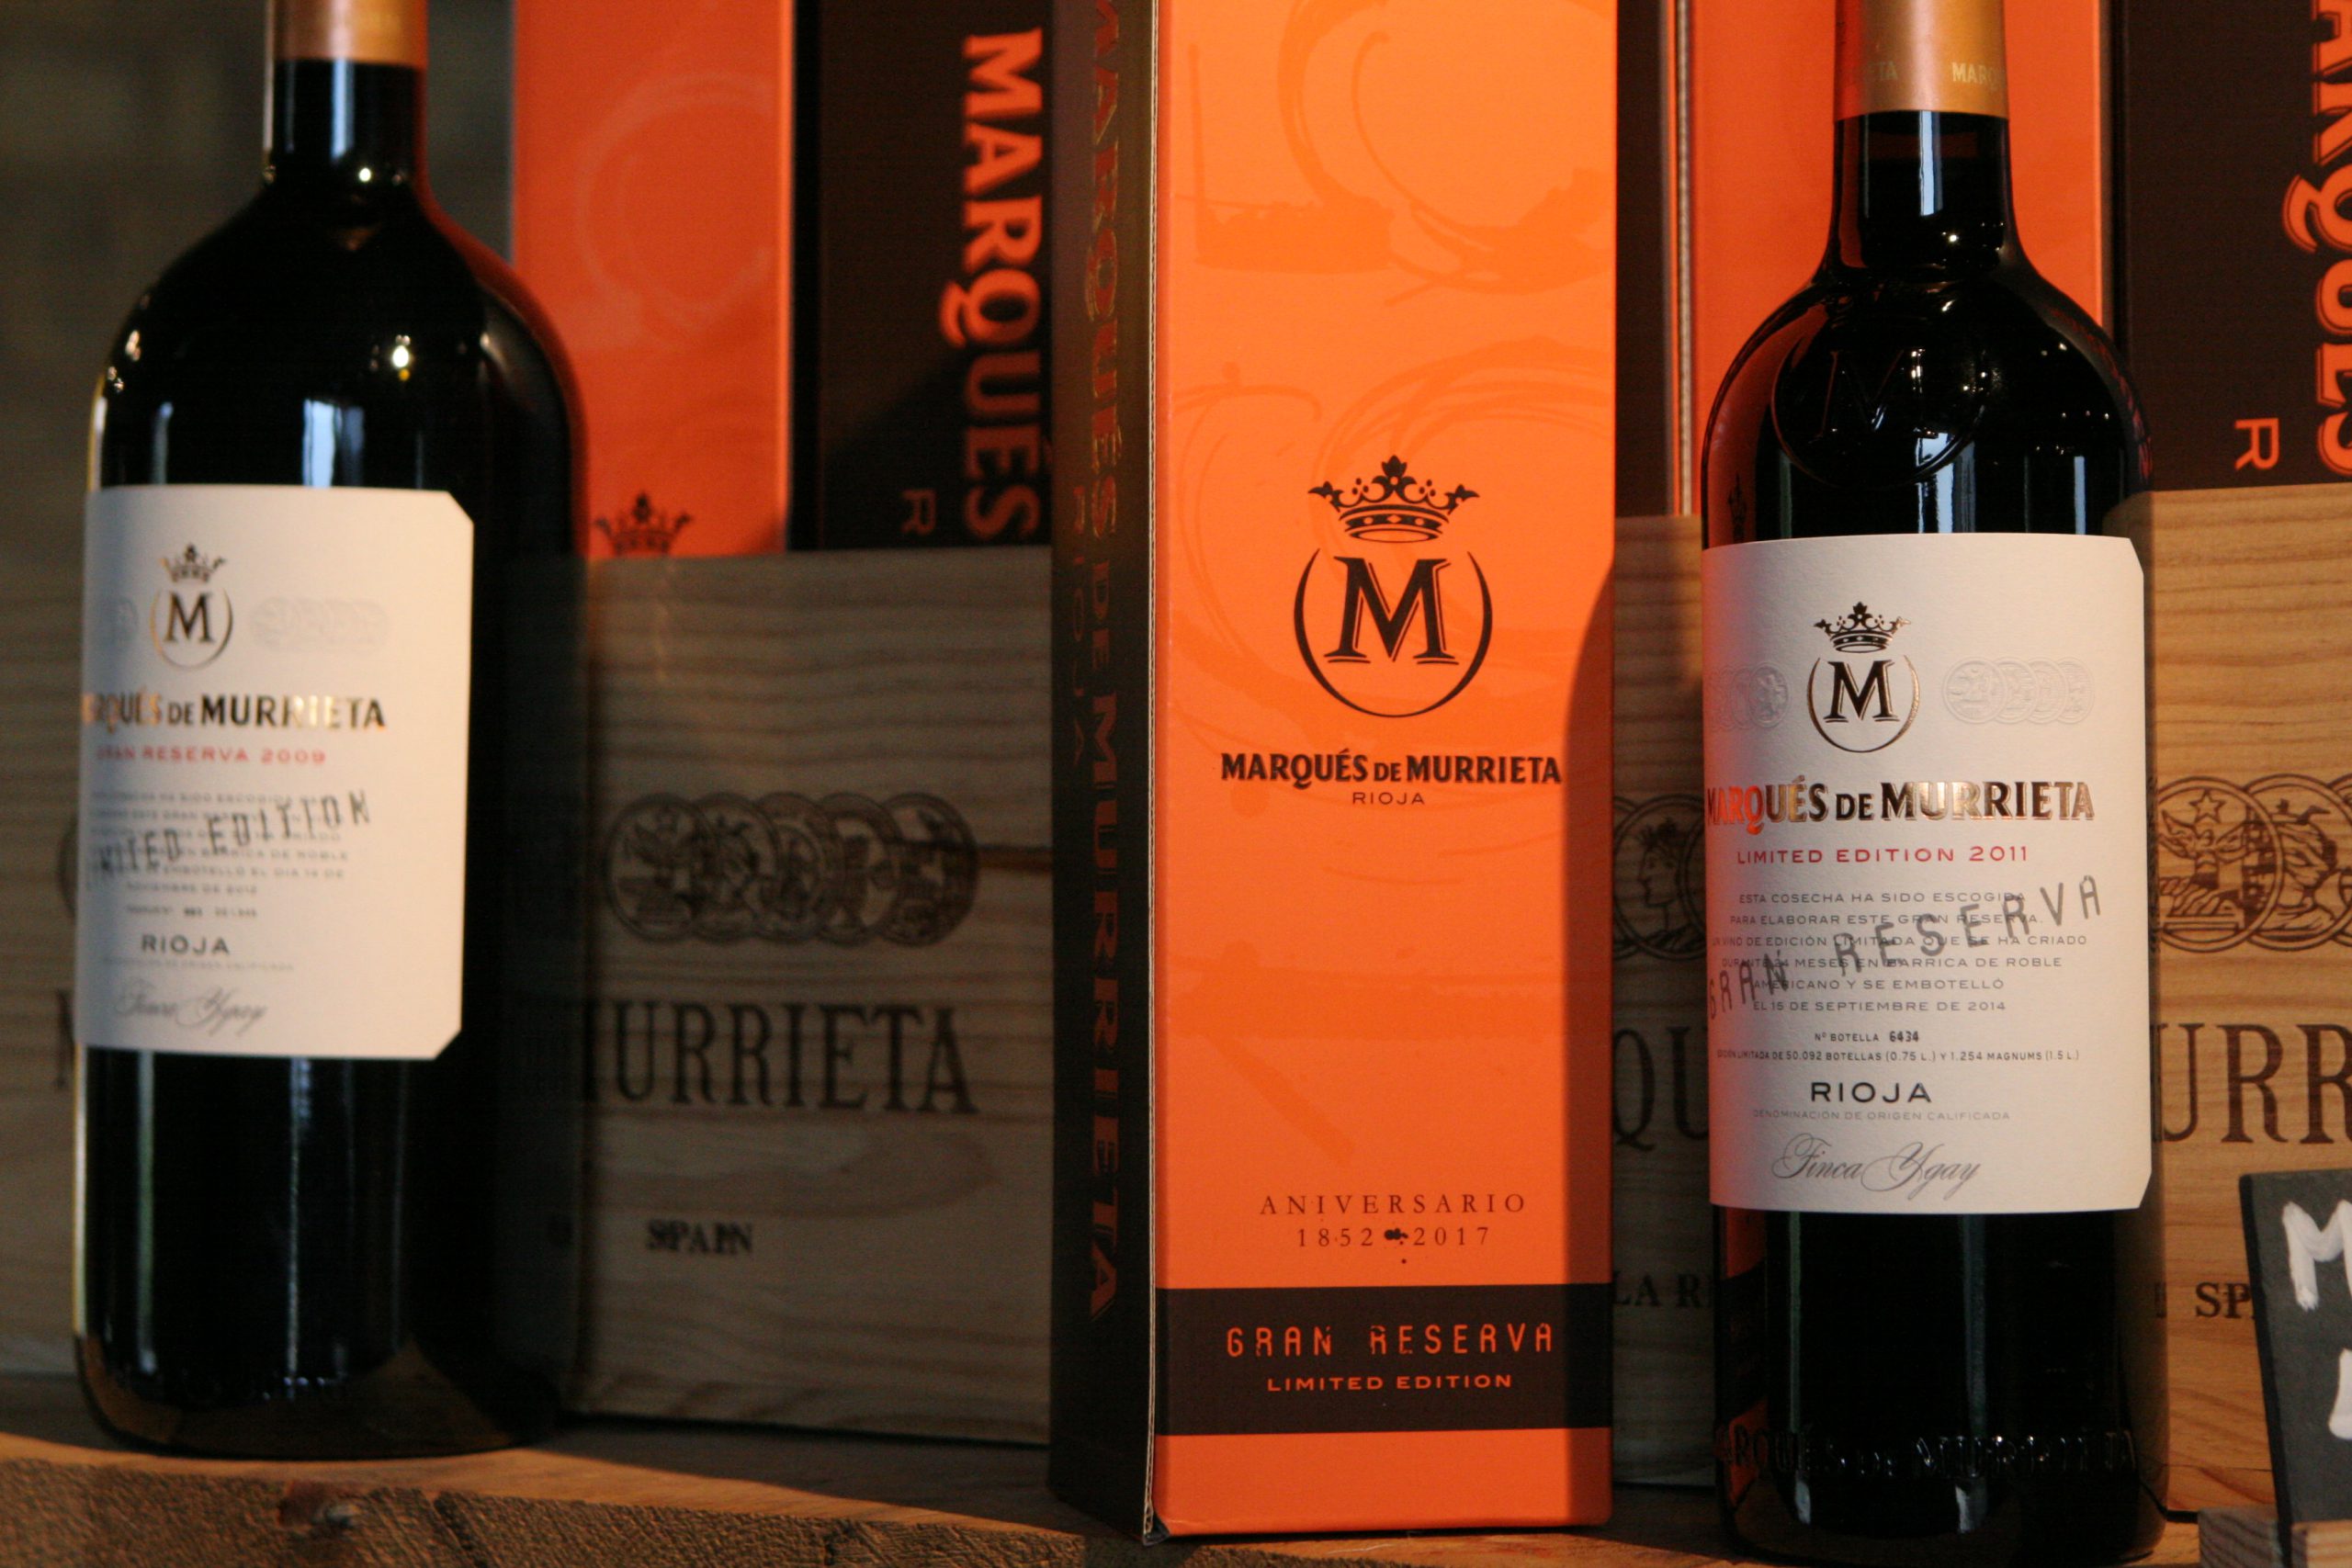 Marques de Murrieta bottles